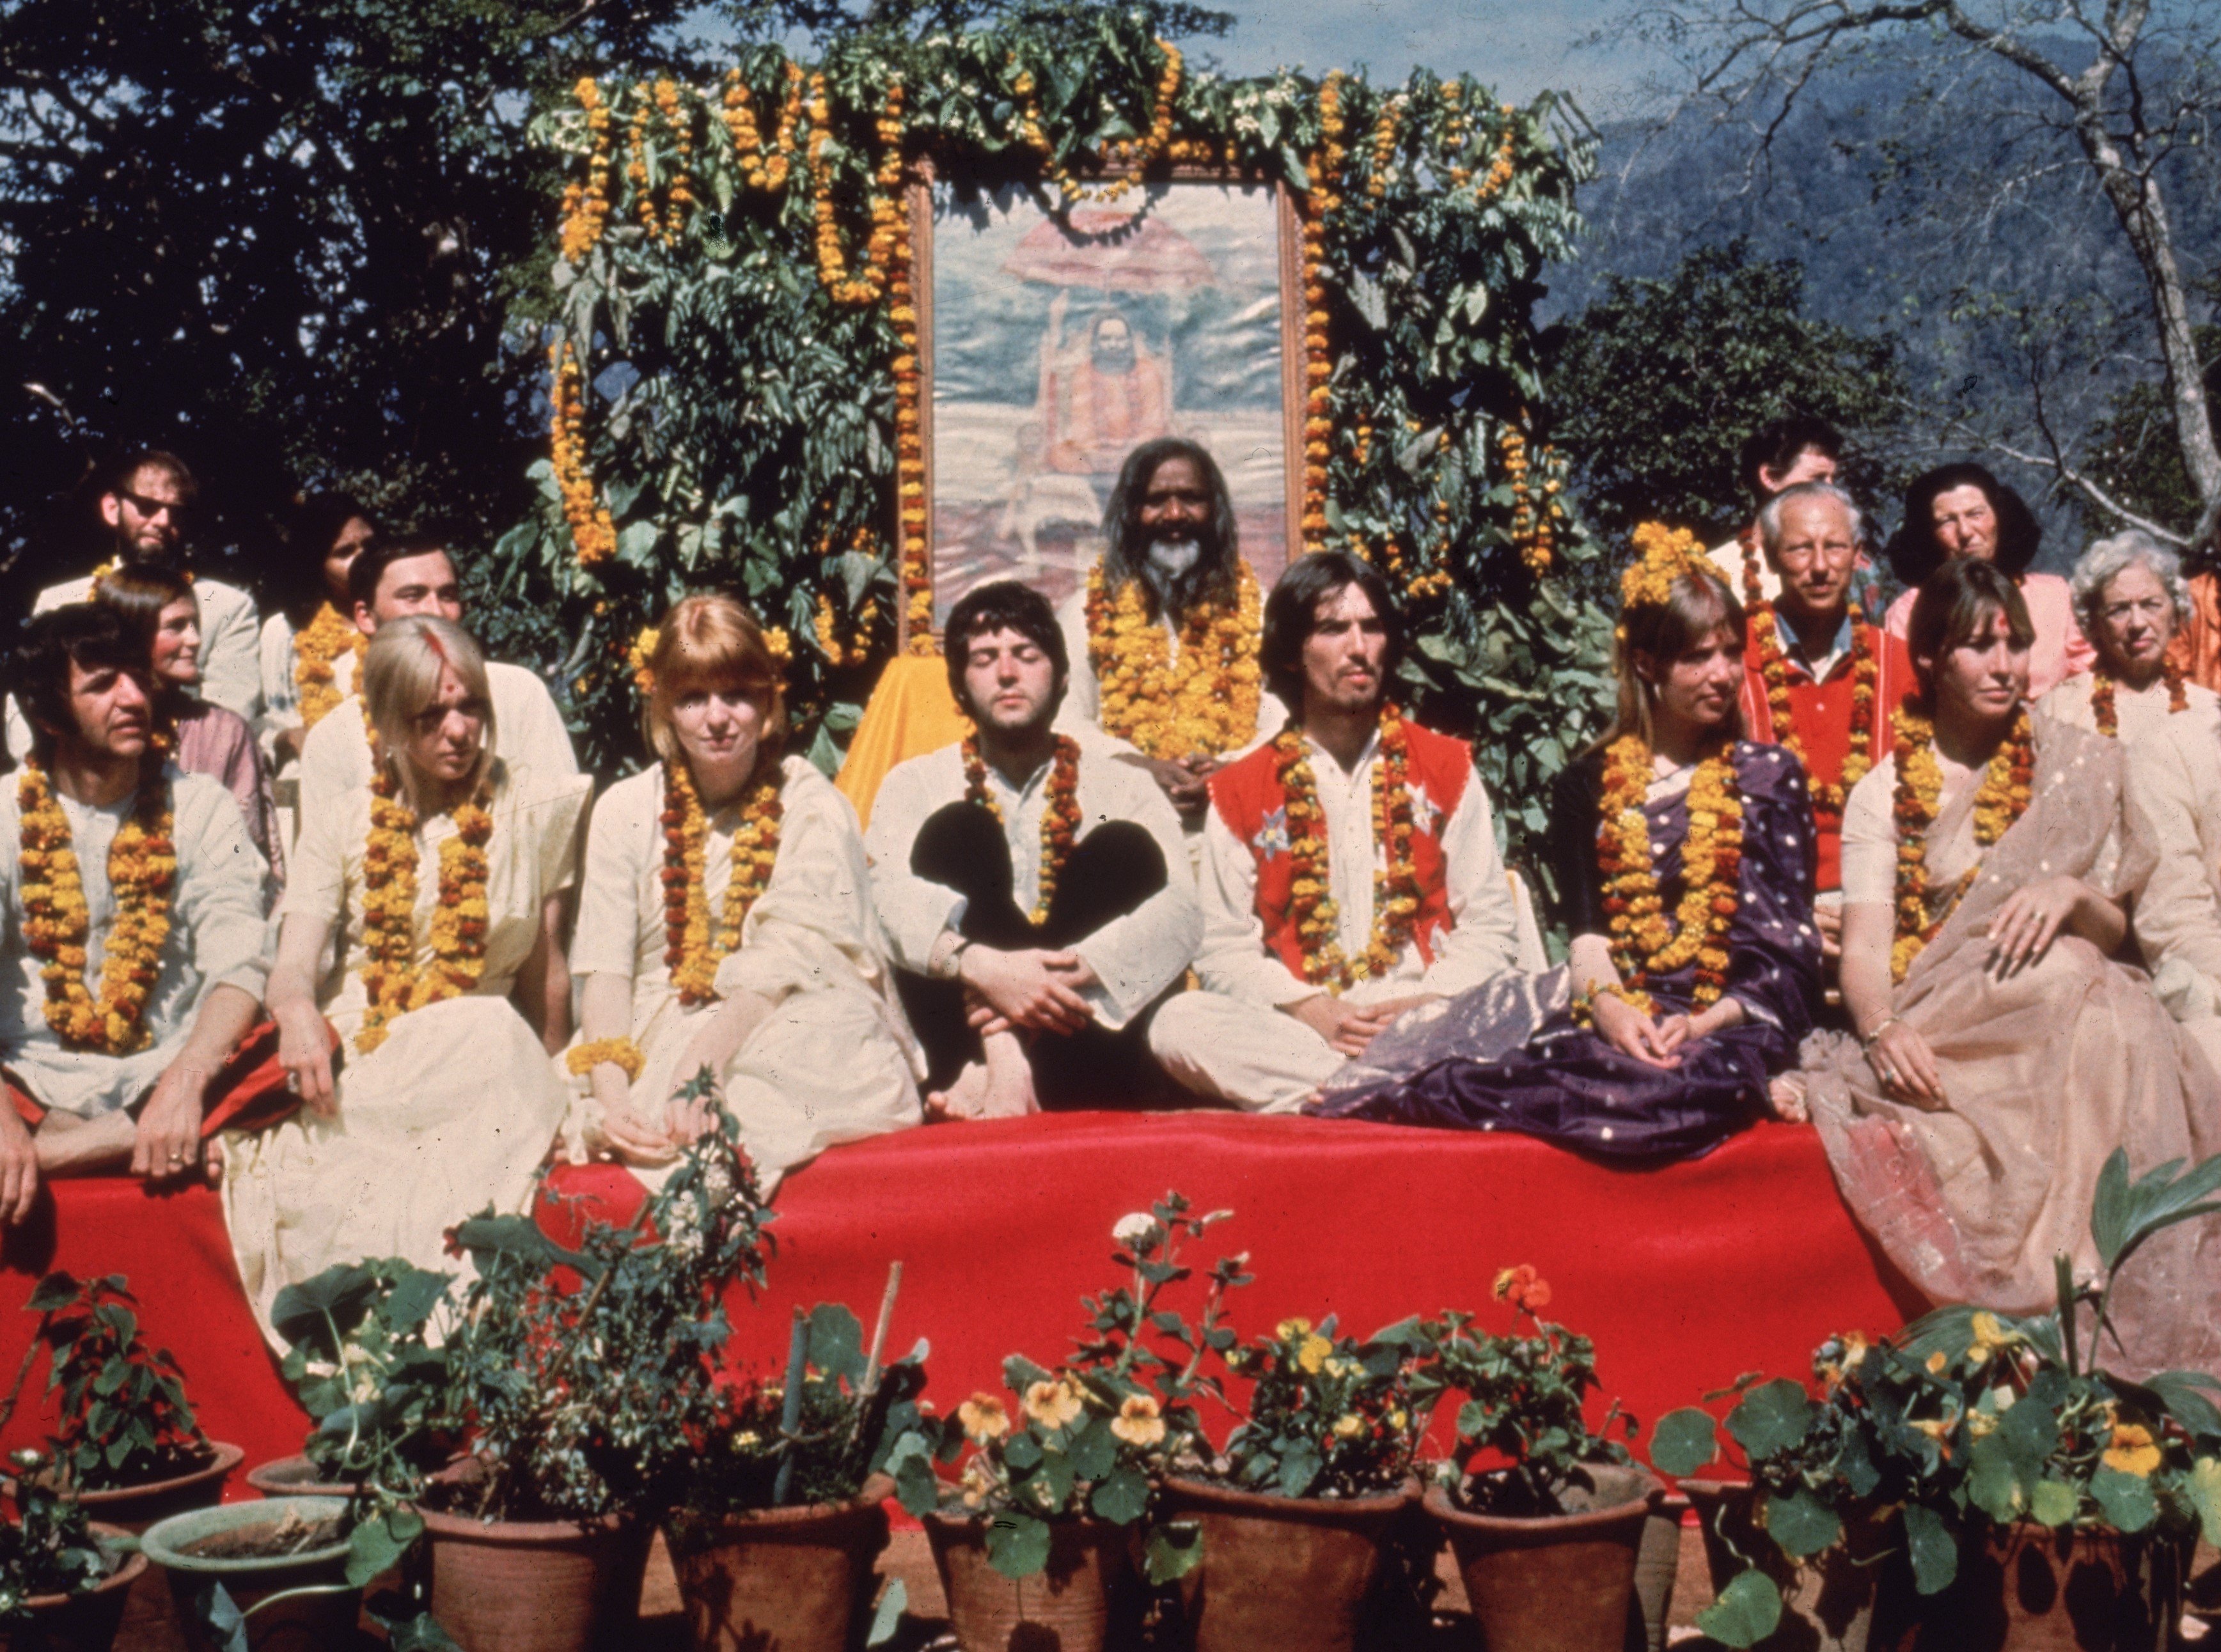 The Beatles' Paul McCartney, George Harrison, Maharishi Mahesh Yogi, and others near plants